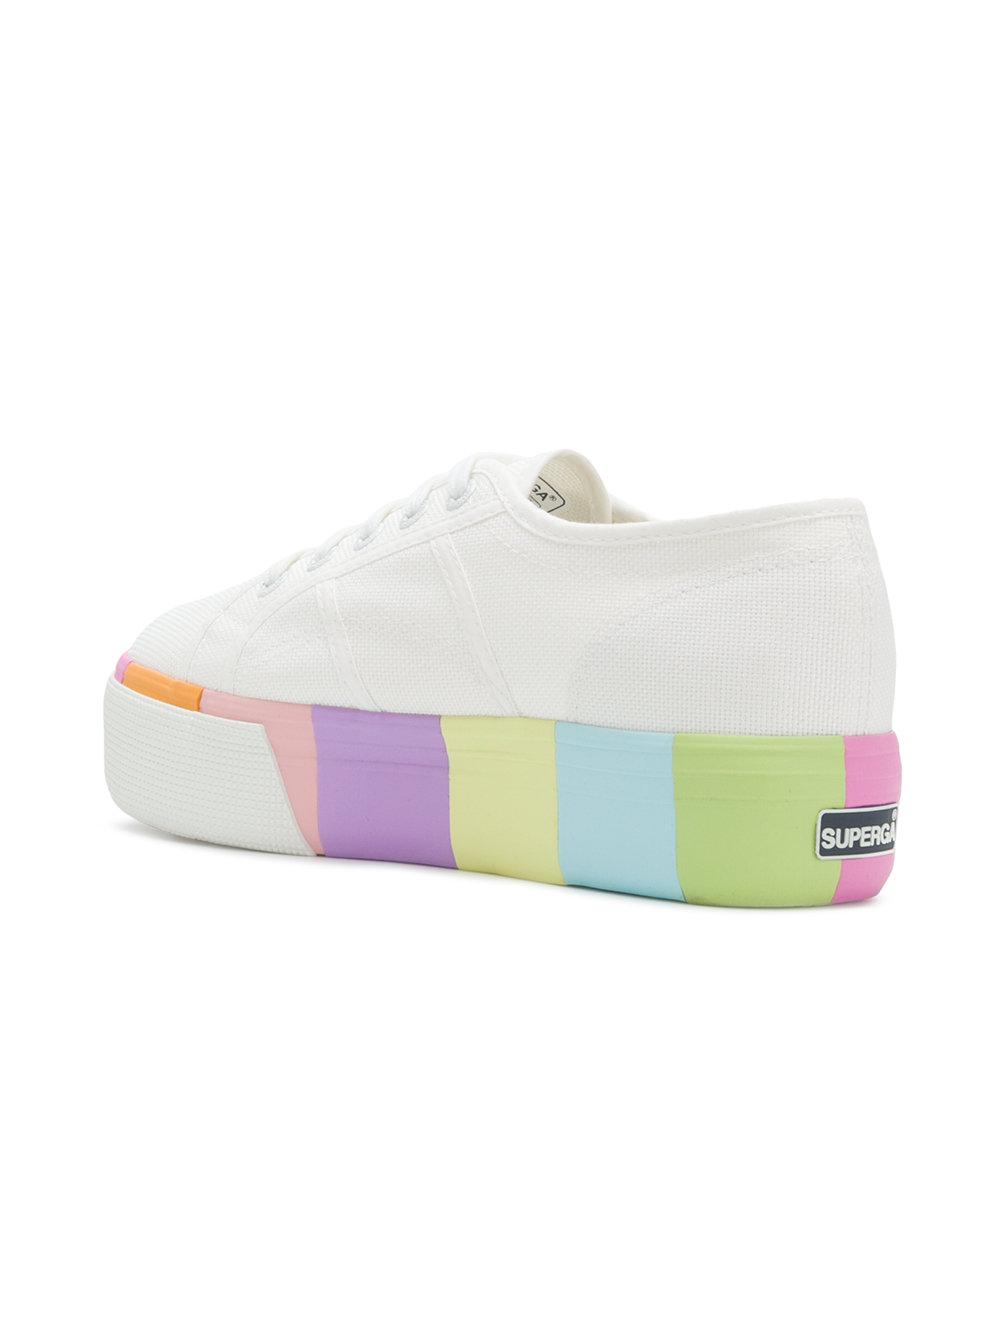 Superga Cotton Rainbow Platform Sole Sneakers in White | Lyst